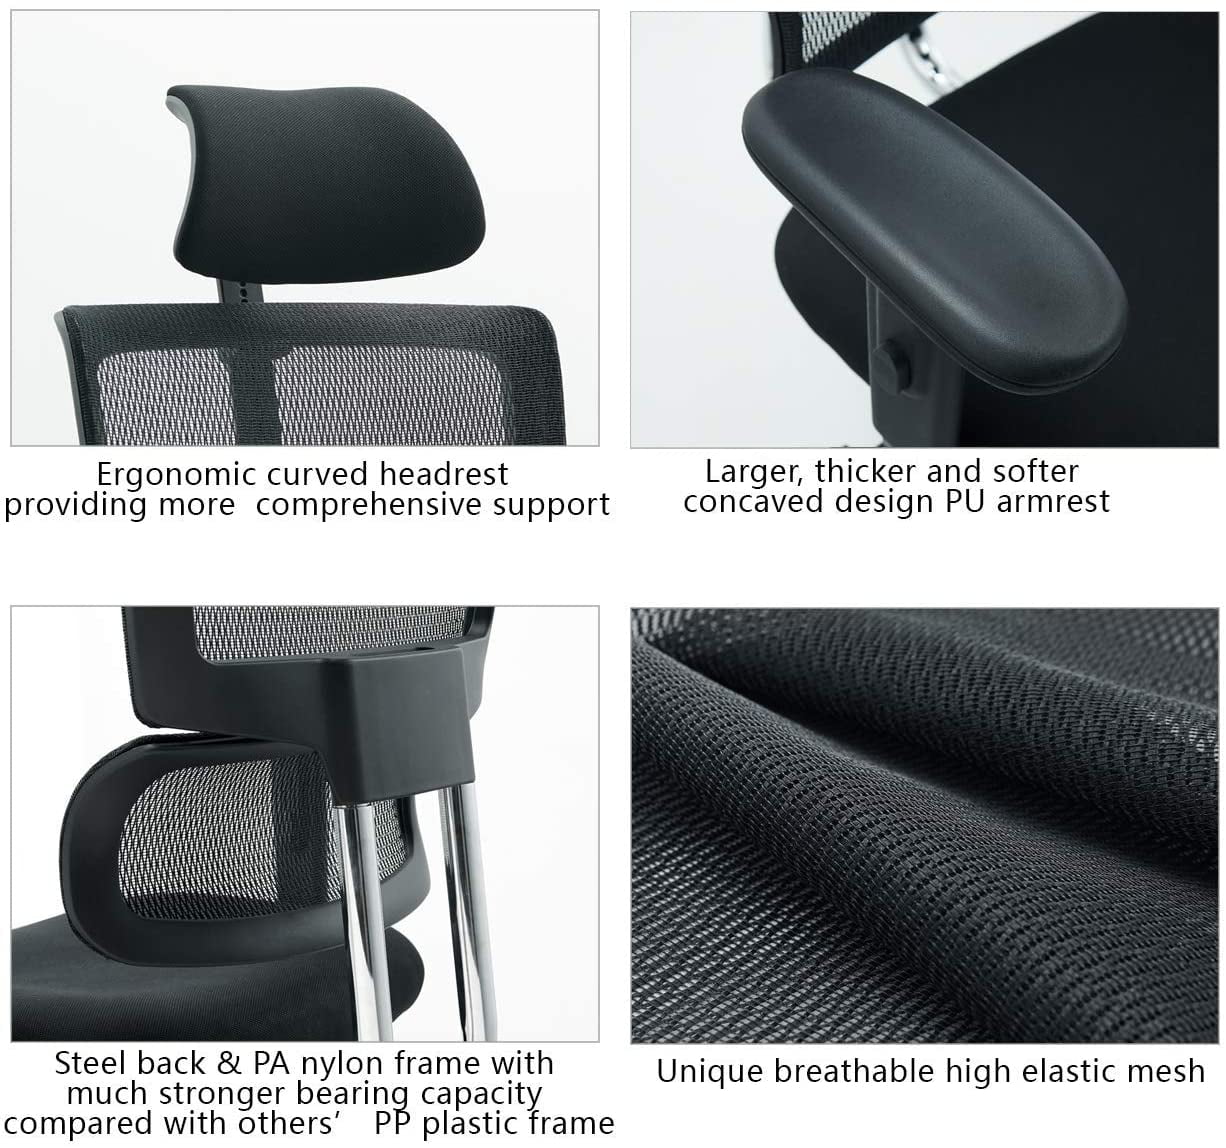 Ticova Ergonomic Office Chair - High Back Desk Chair with Elastic